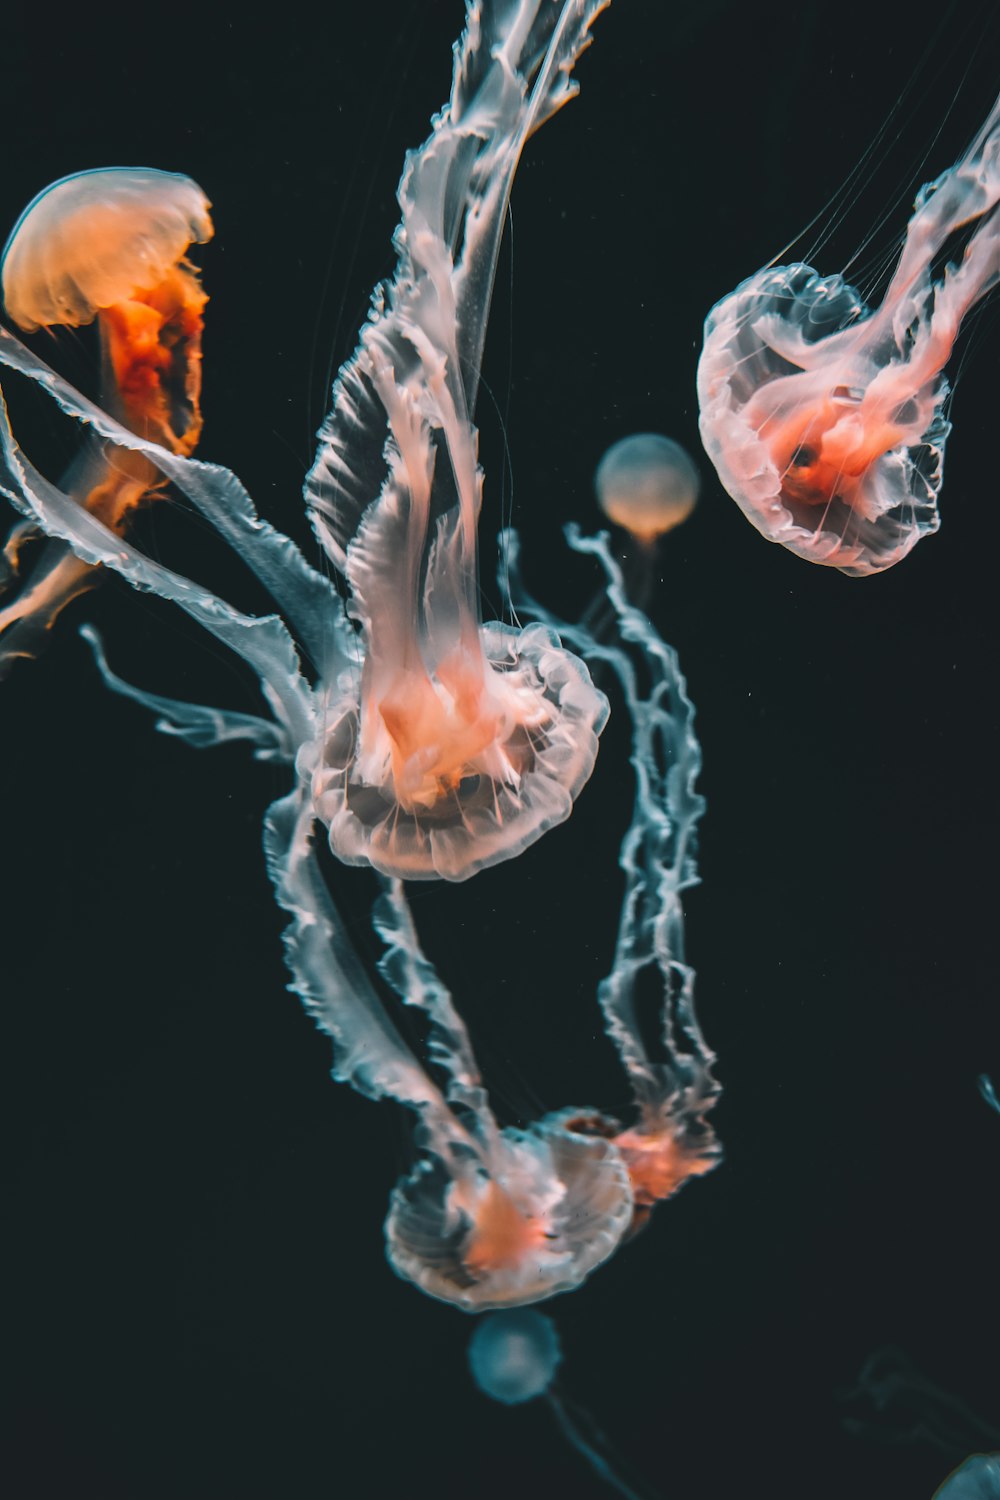 medusas rosadas bajo el agua